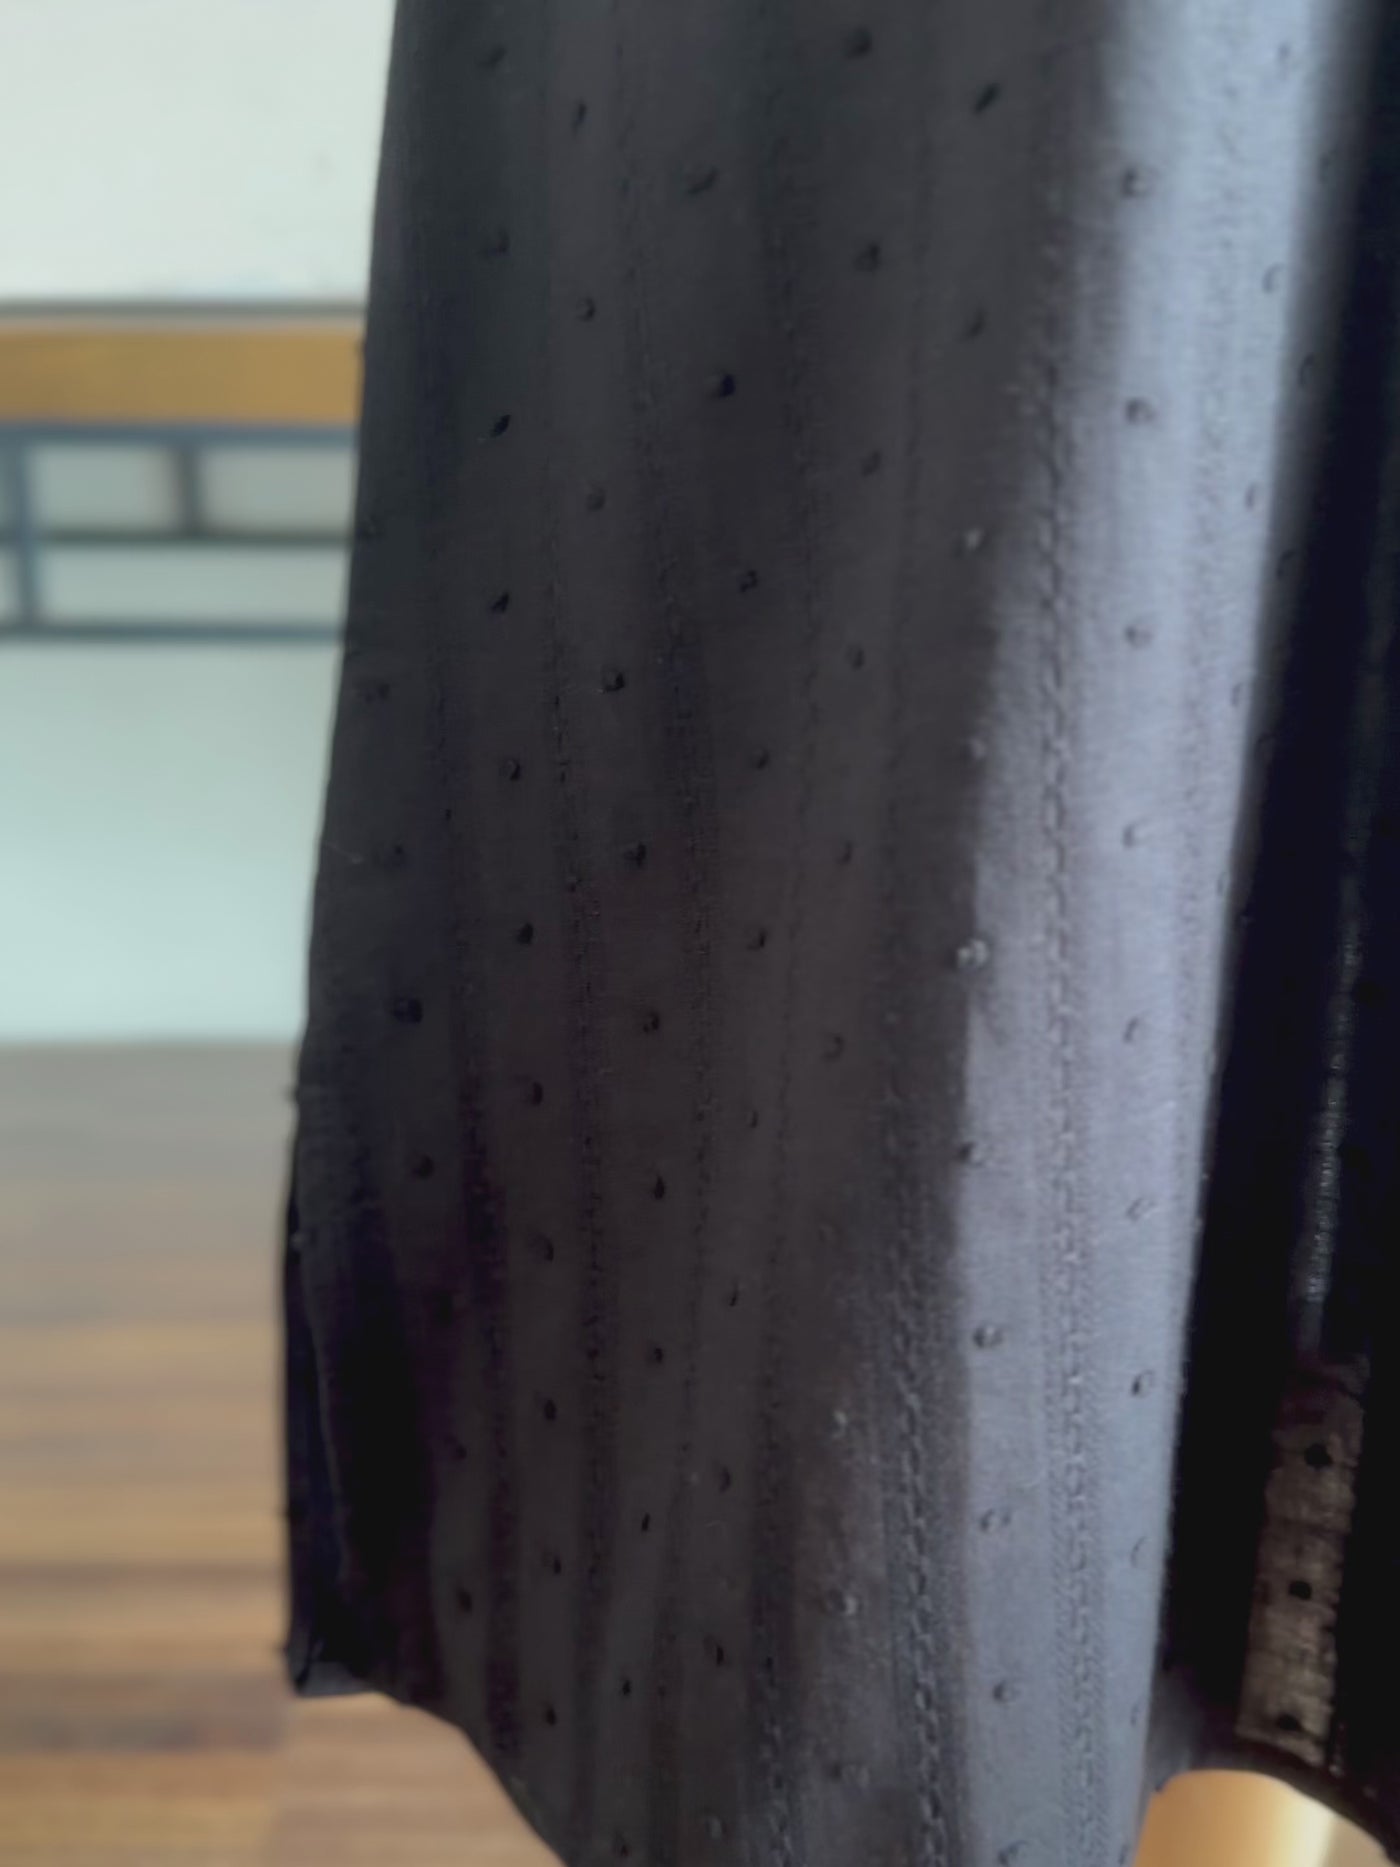 IXORA Baby's Dress with Bolero Set in Black Bloom